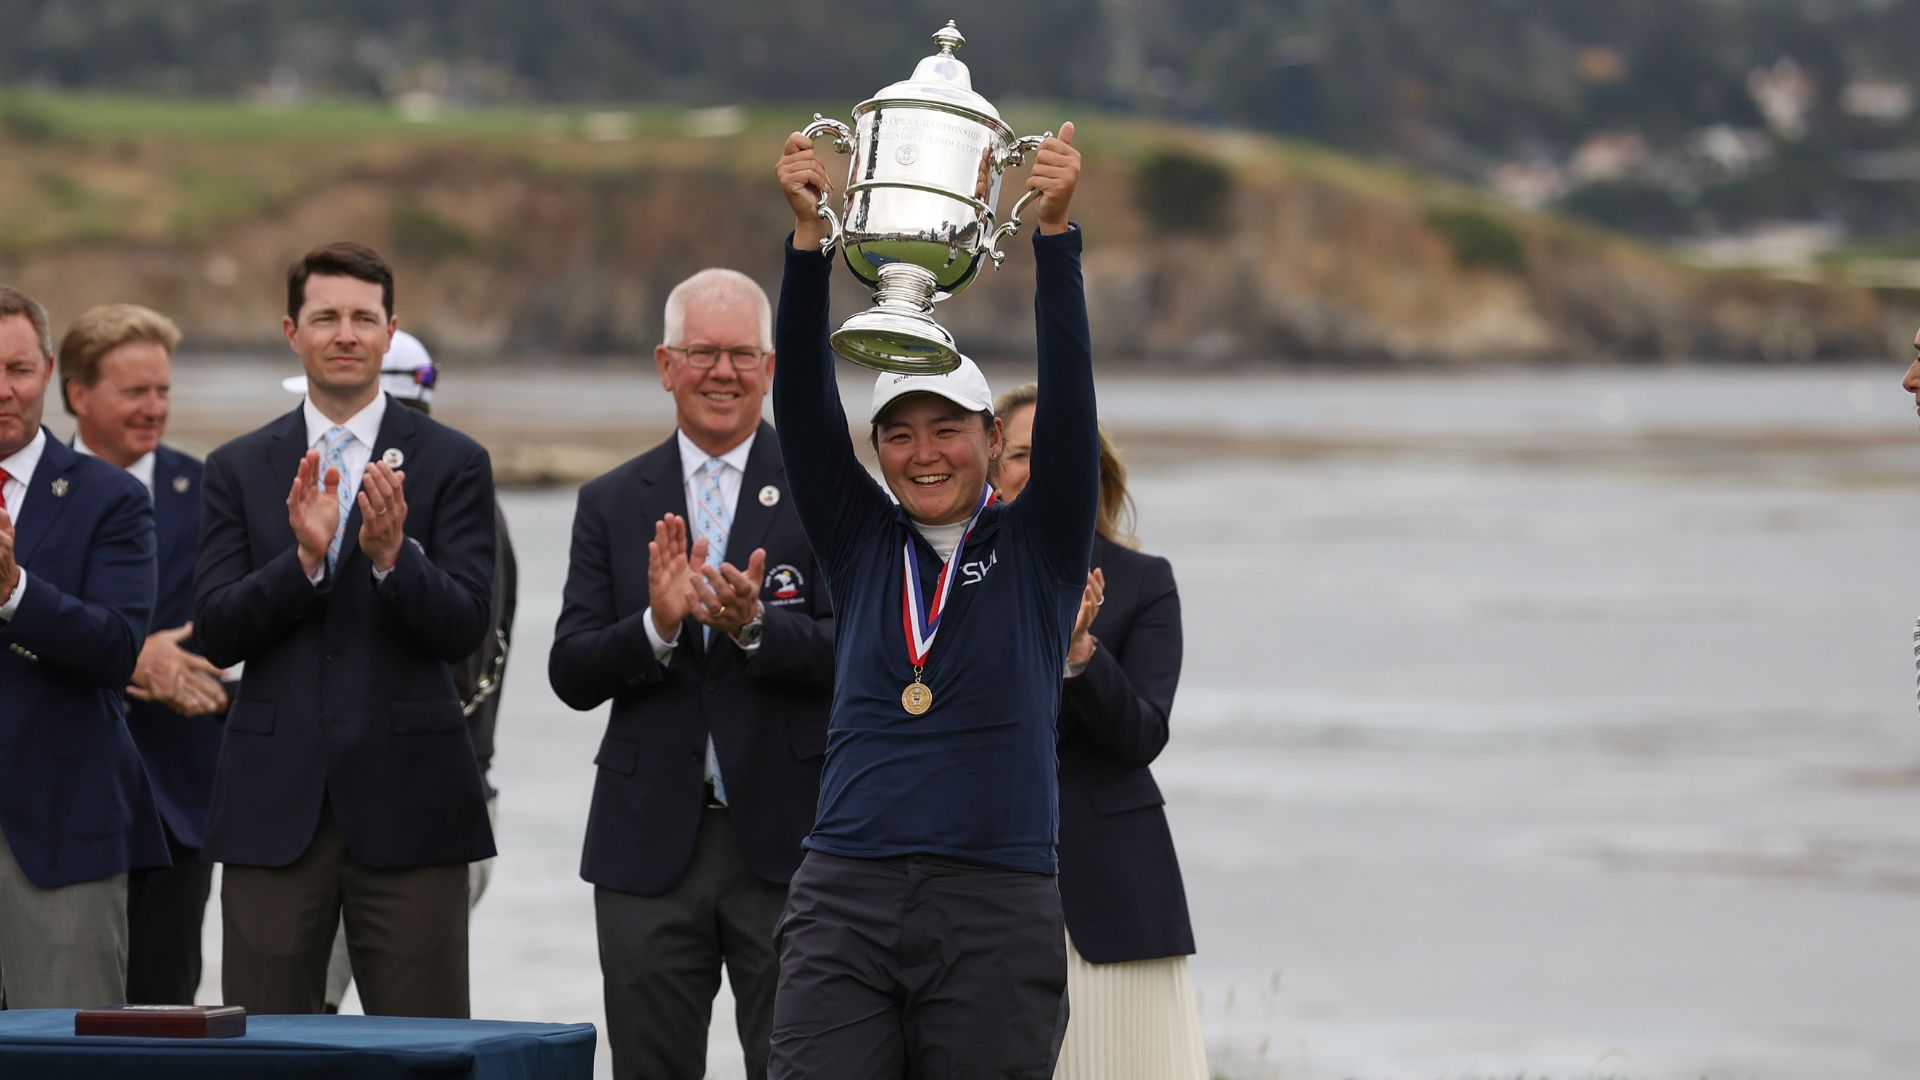 Allisen Corpuz wins the 2023 U.S. Women’s Open at Pebble Beach for her first LPGA title